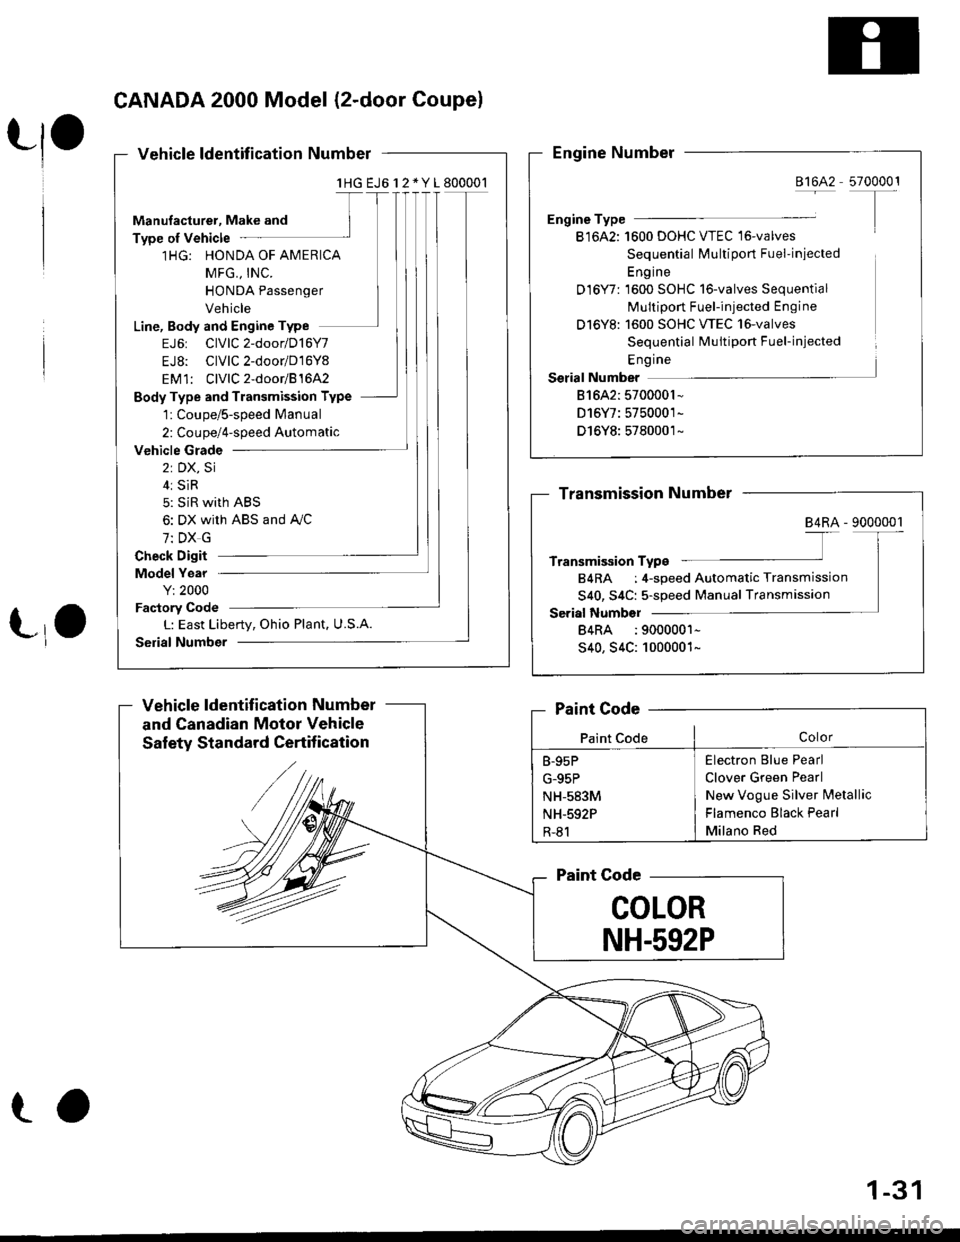 HONDA CIVIC 1996 6.G Workshop Manual CANADA 2000 Model (2-door Coupel
Vehicle ldentification Number
lHG EJ6l 2 * Y 1800001
Manufacturer, Make and
Type of Vehicle
1HG: HONDA OF AMERICA
MFG,, INC.
HONDA Passenger
Vehicle
Line, Body and En